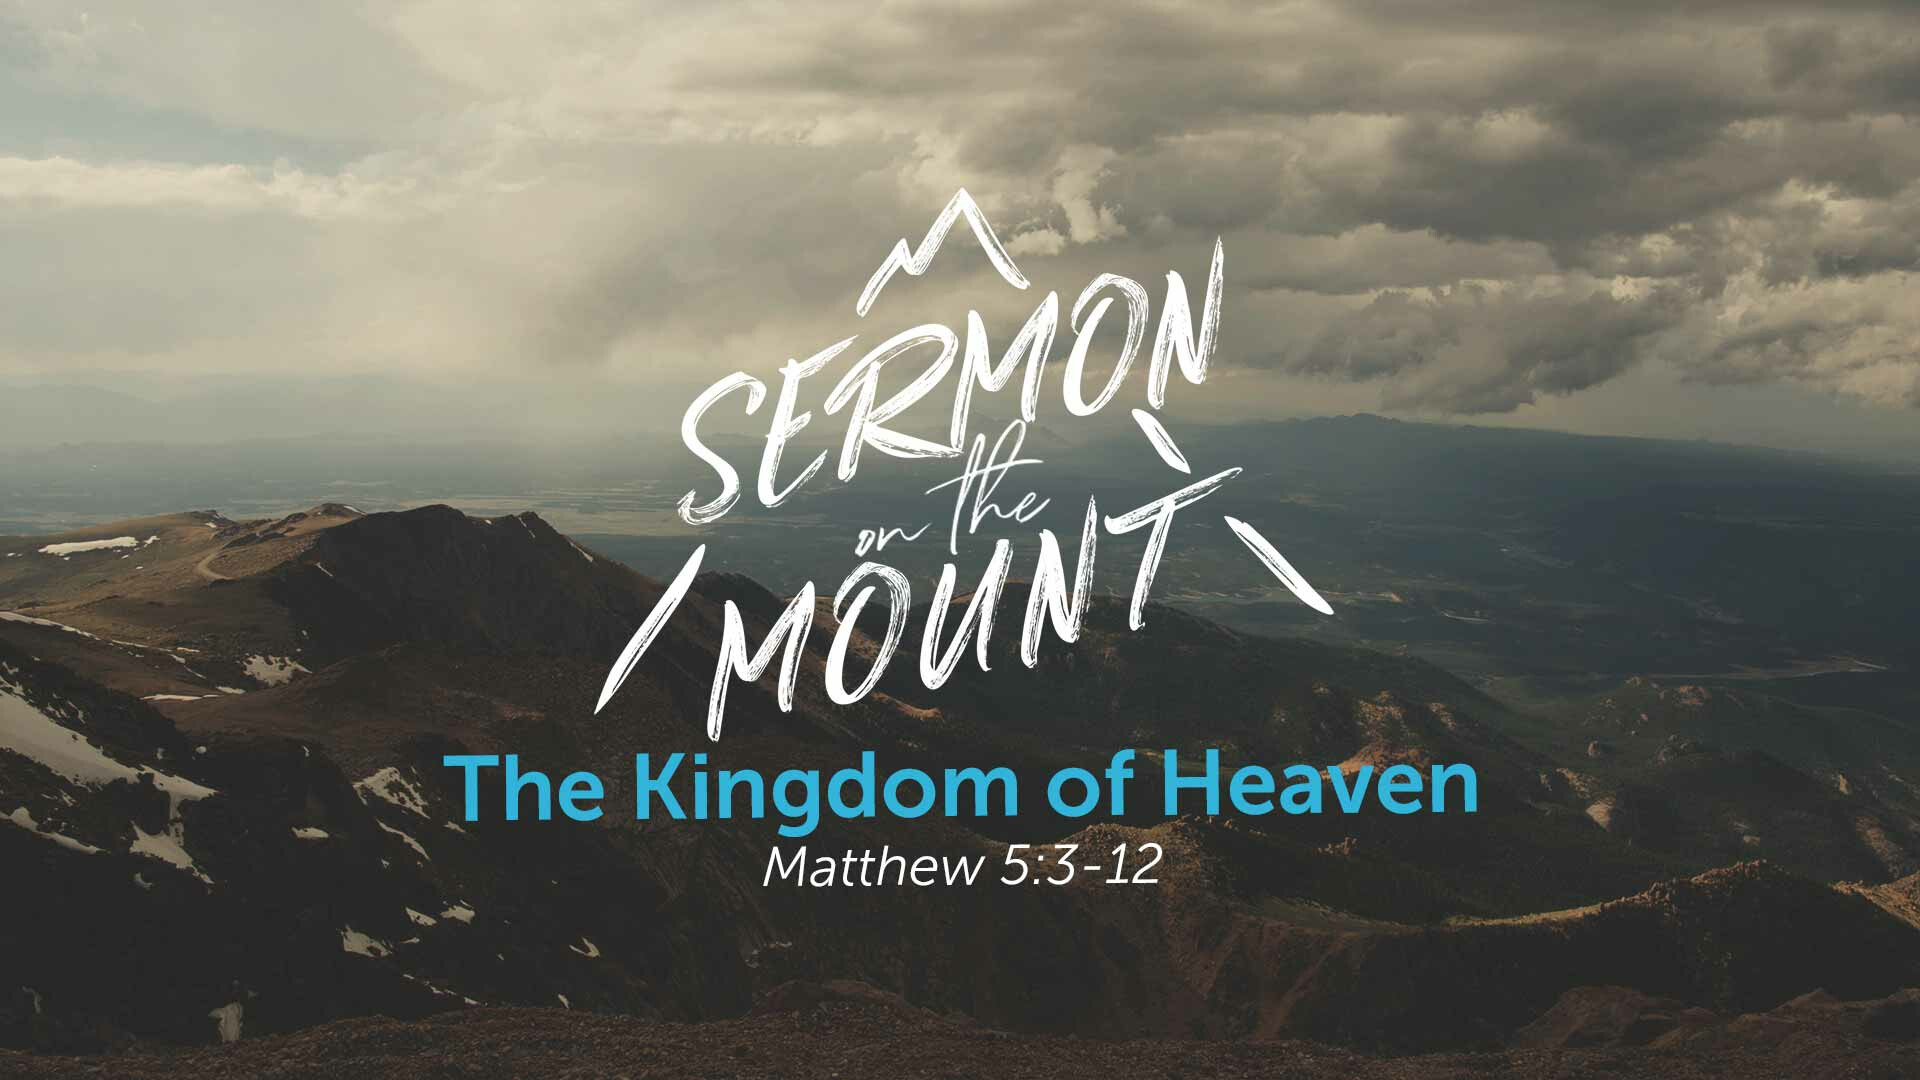 Sermon on the Mount - The Kingdom of Heaven